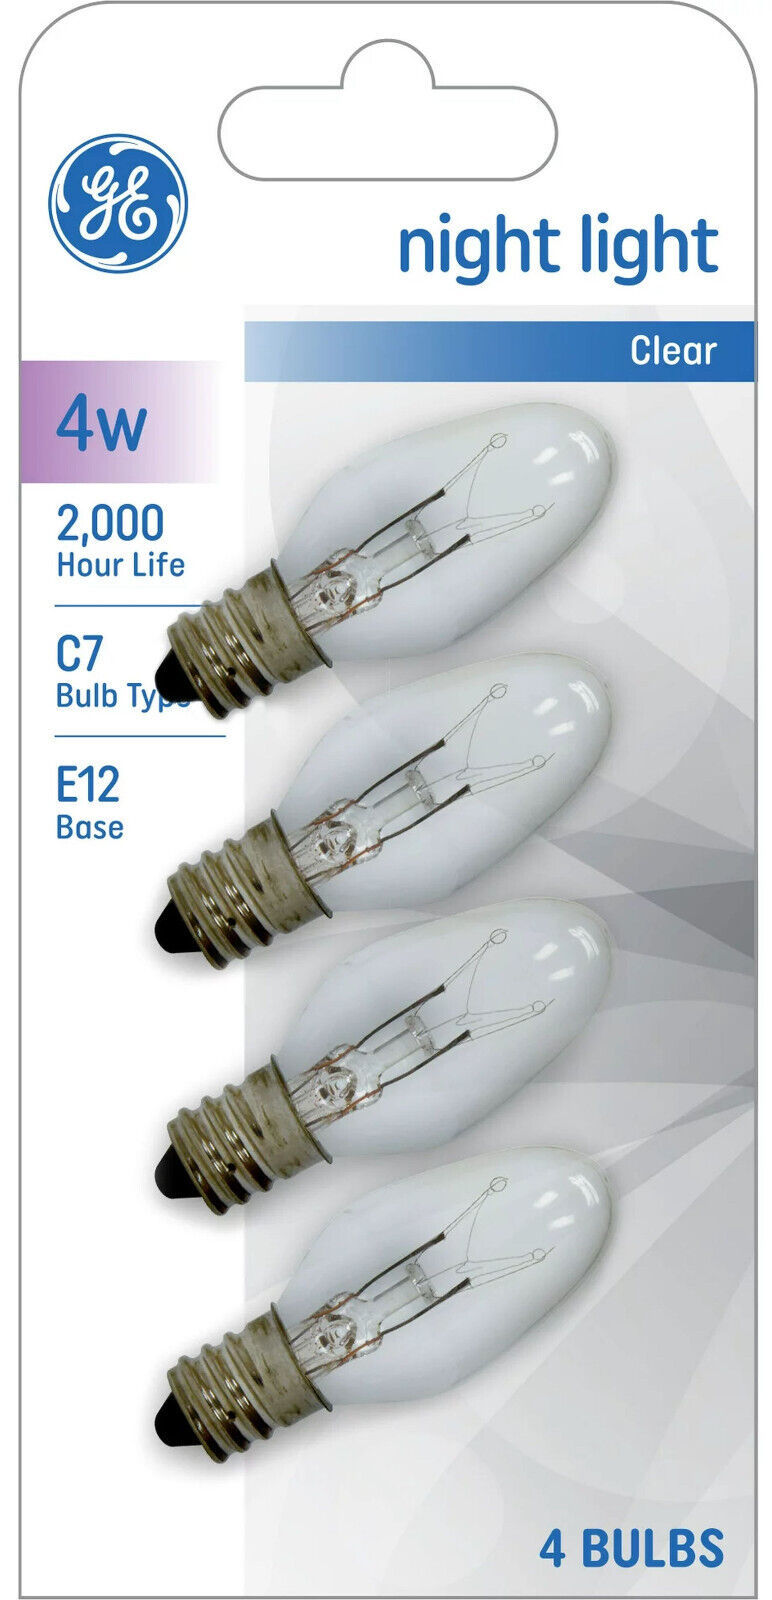 GE CLEAR Night Light 4 BULBs 4 Watt 91854 e12 candelabra base C7 4w 4 PACK 73257 - $22.01